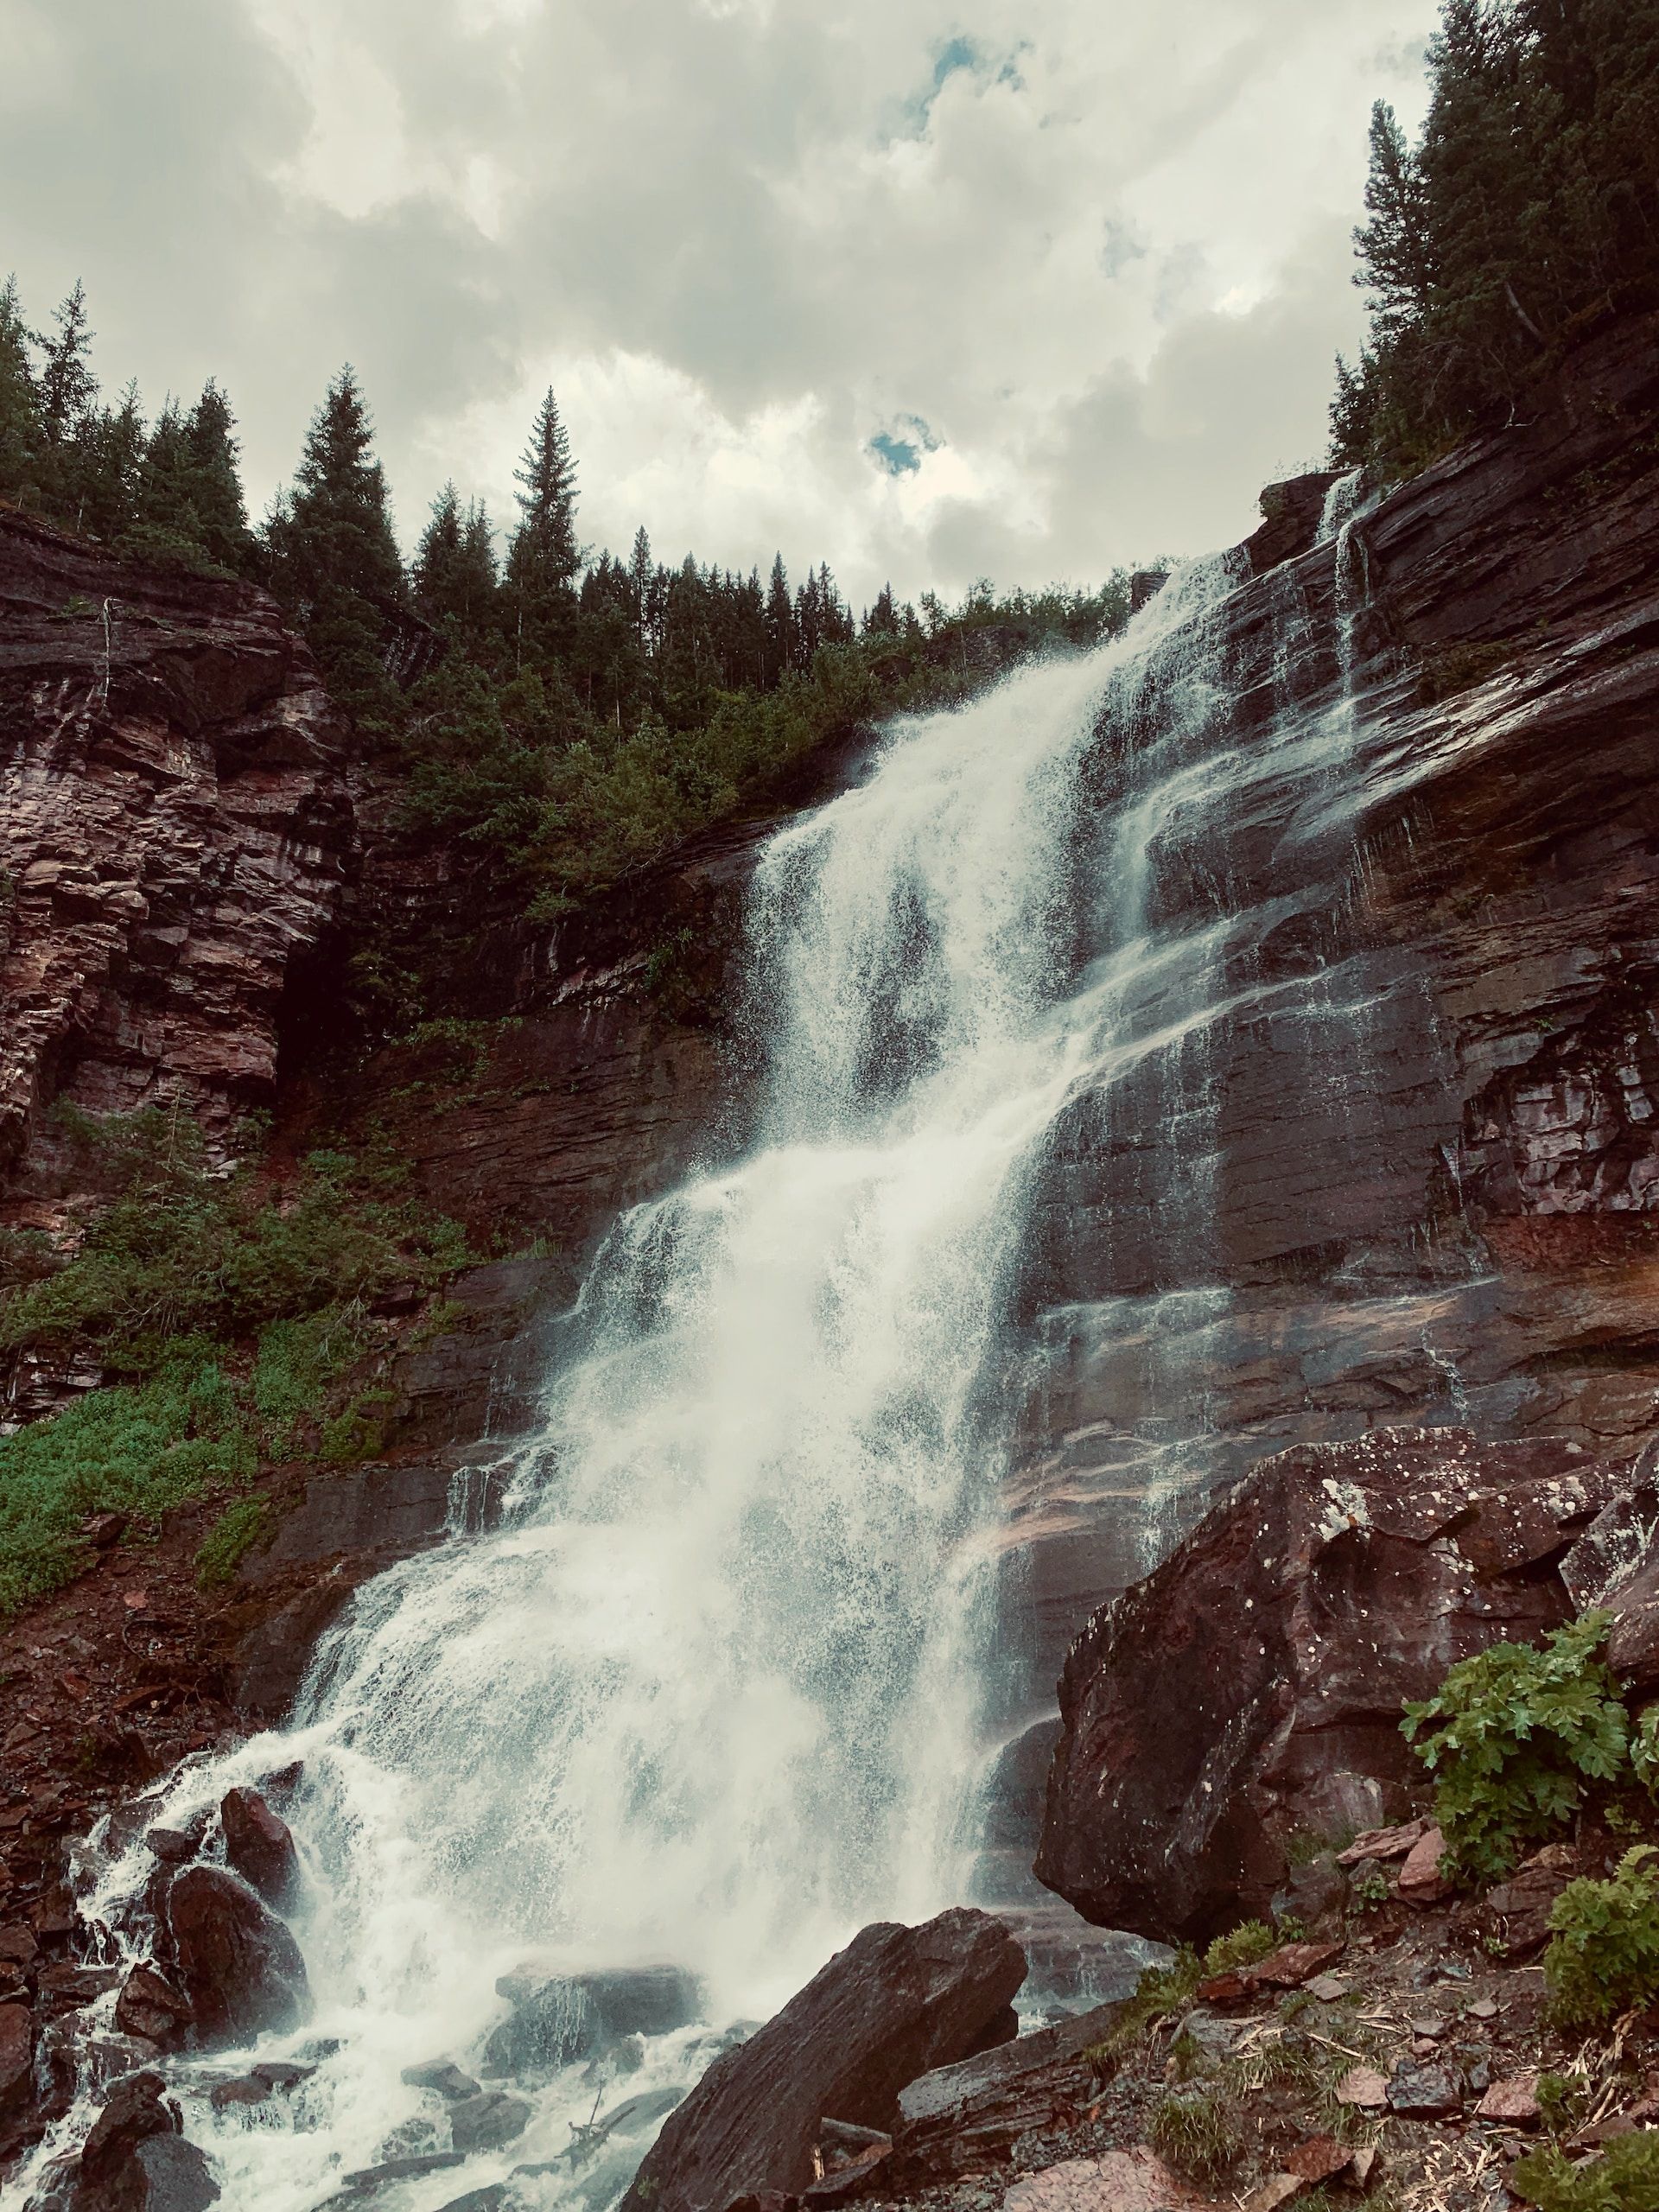 A view of Bear Creek Falls